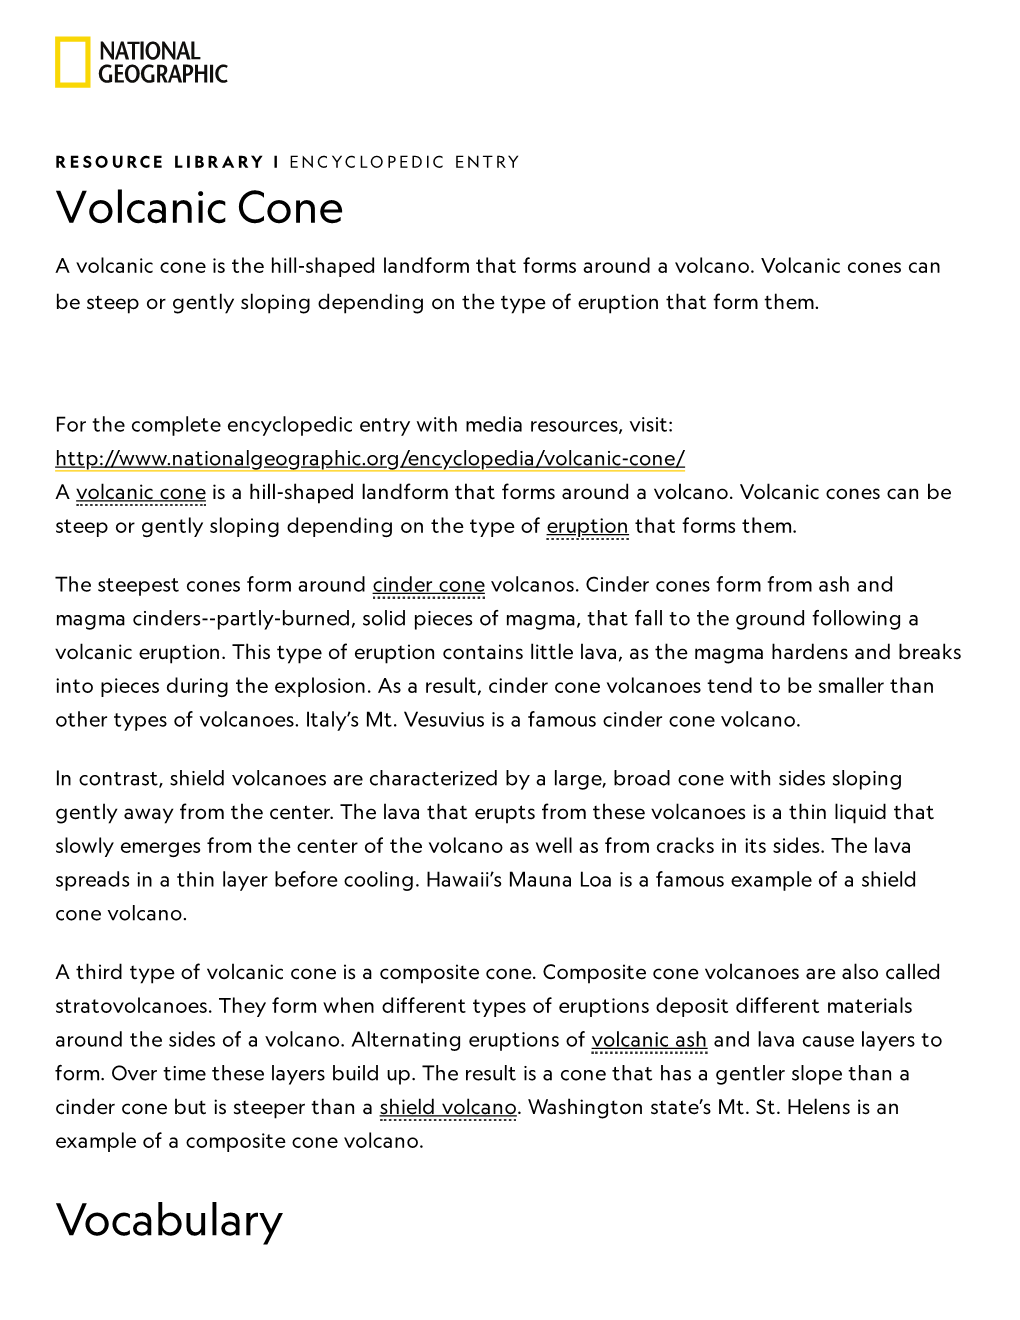 Volcanic Cone Vocabulary